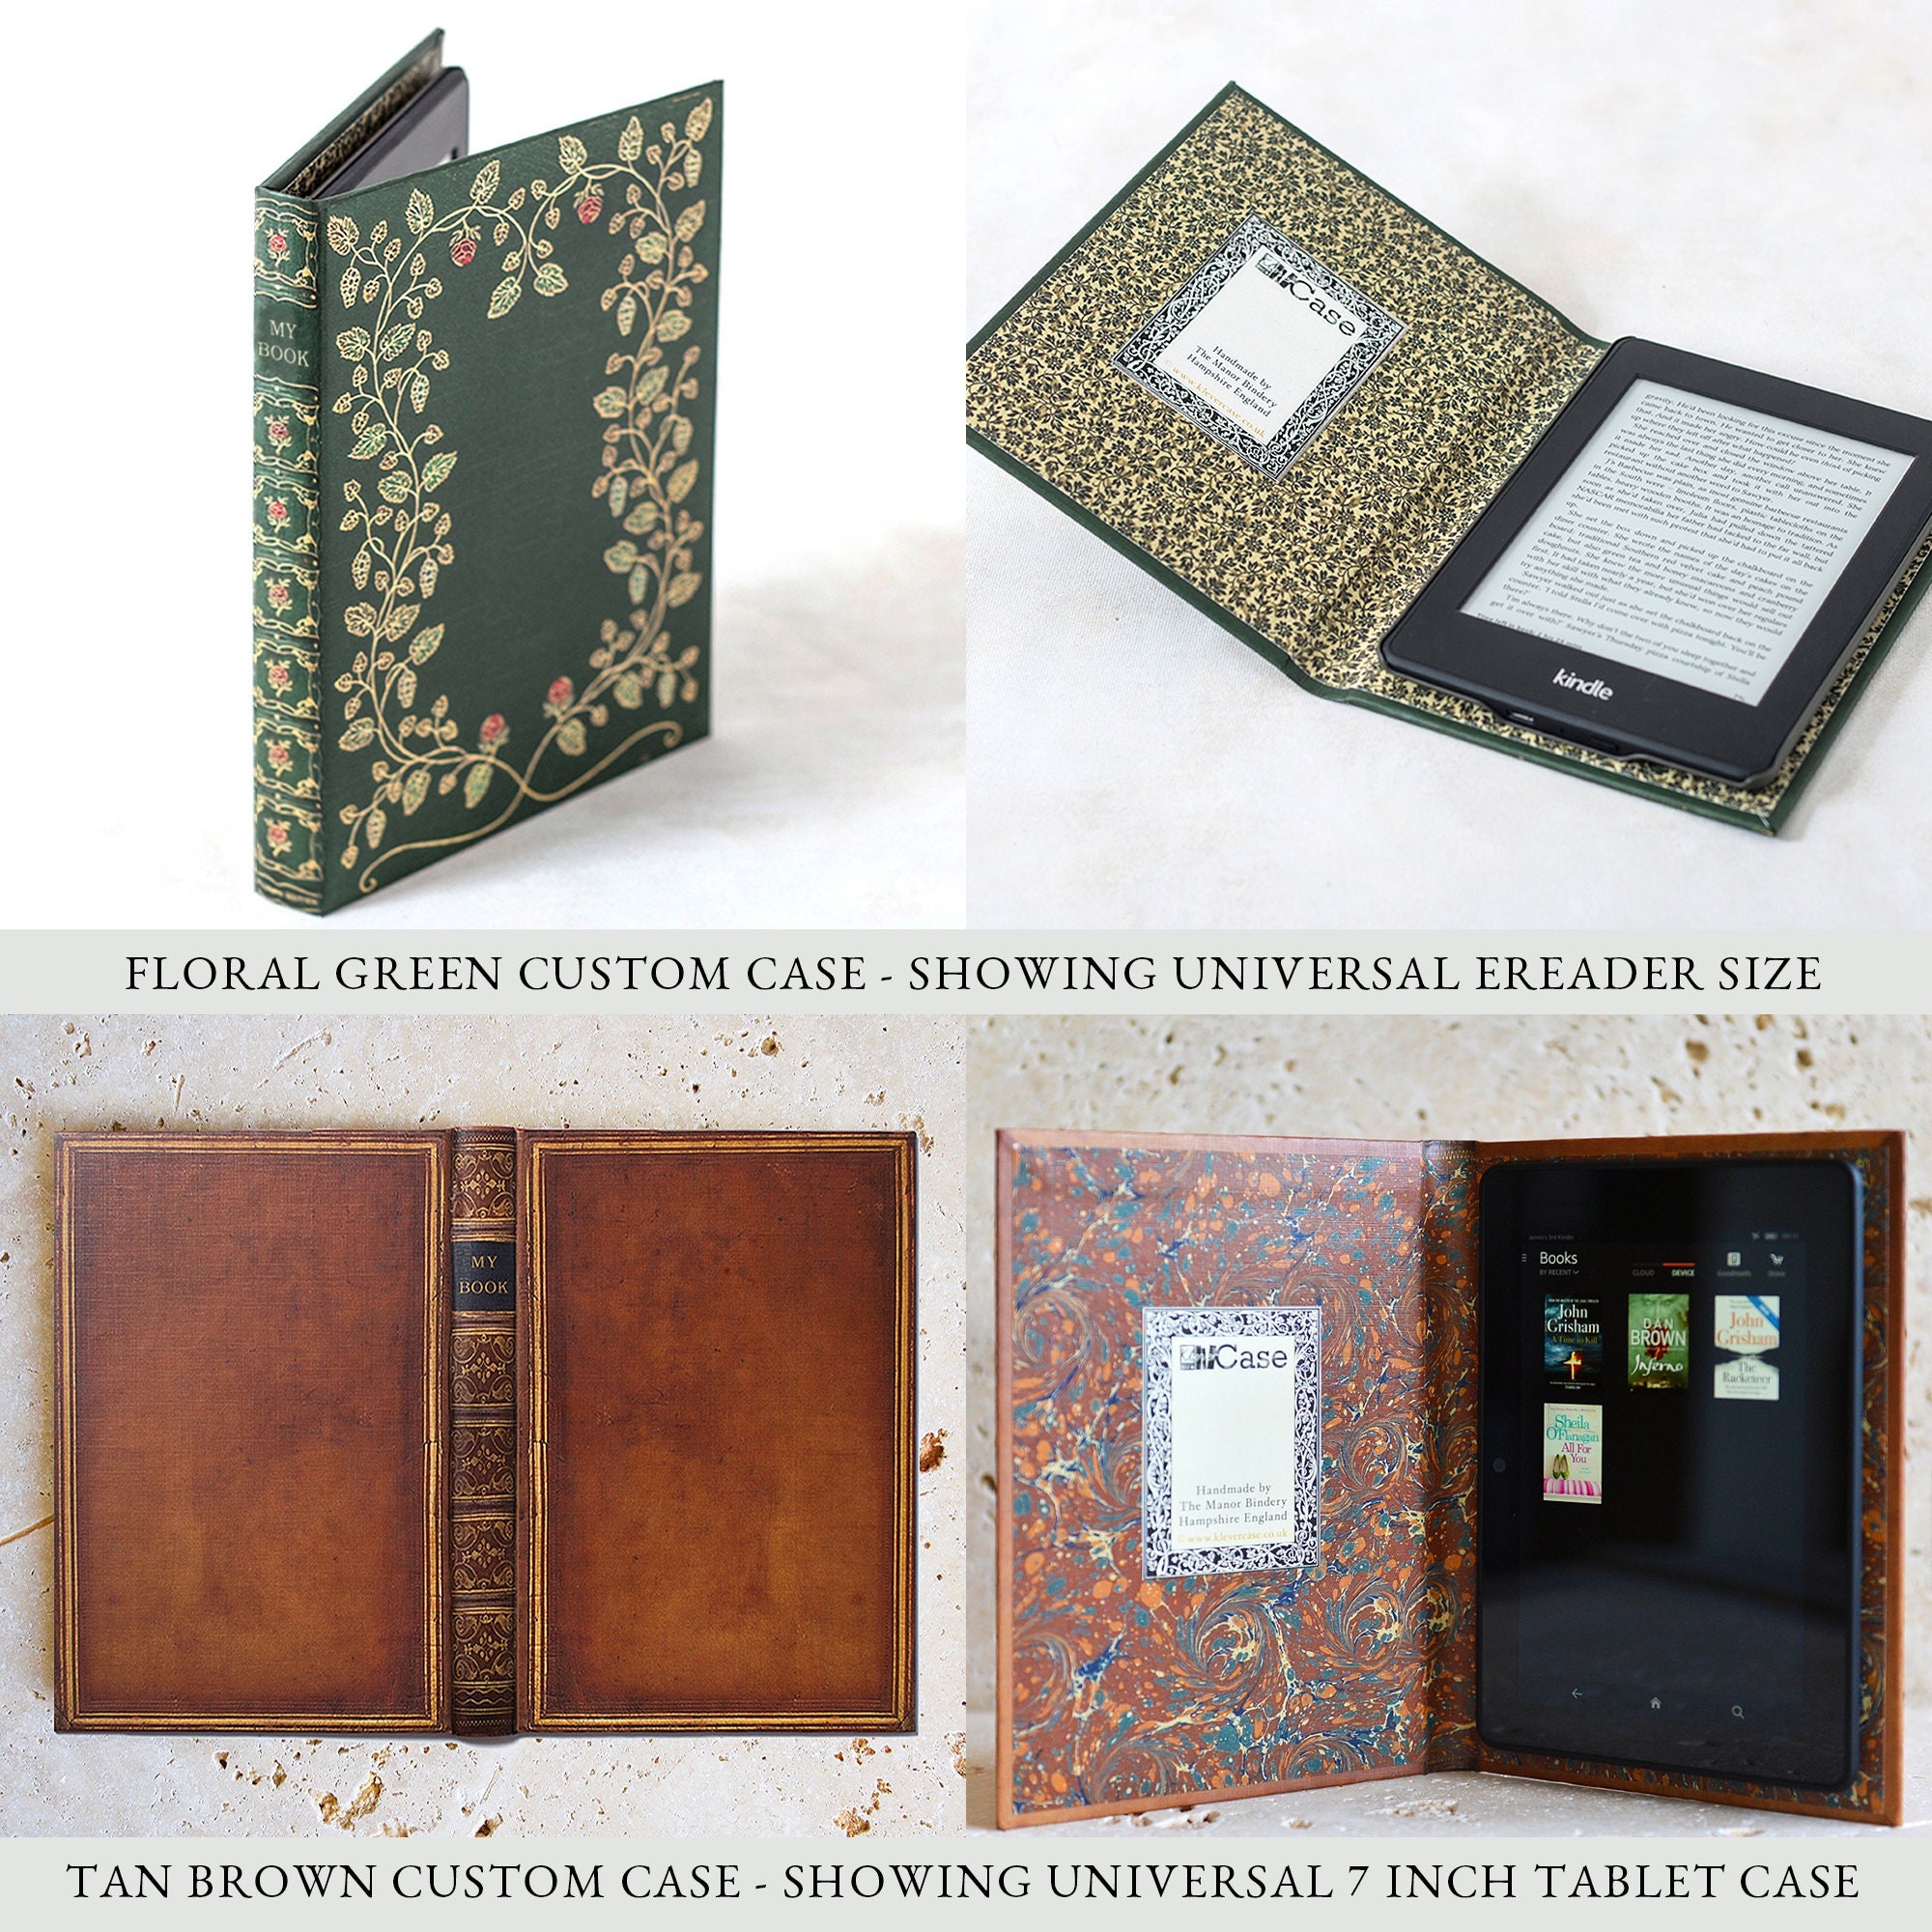 Klevercase Universal Kindle and Ereader or Tablet Case With Hardback Book  Cover Design Gift for Book Lovers 